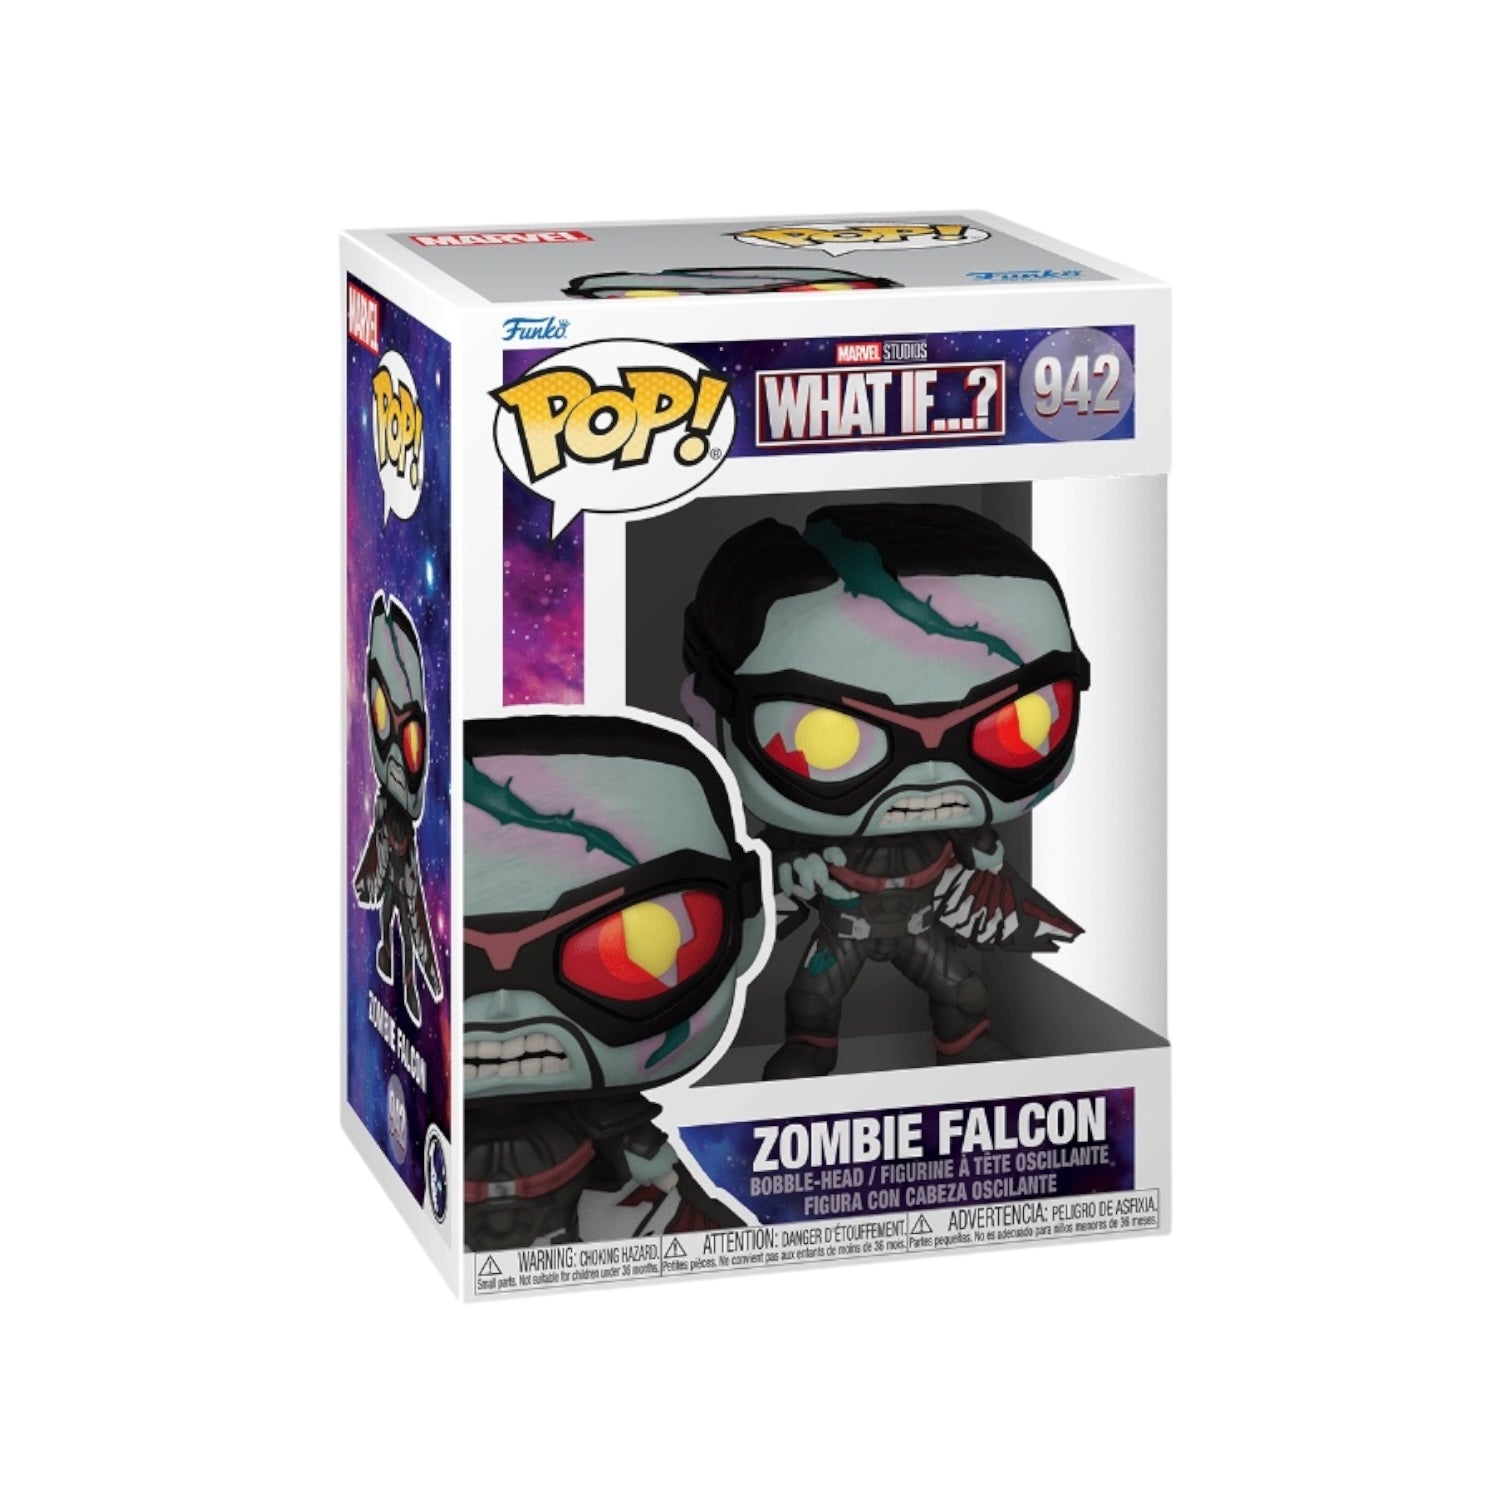 Zombie Falcon #942 Funko Pop! - What If ...?